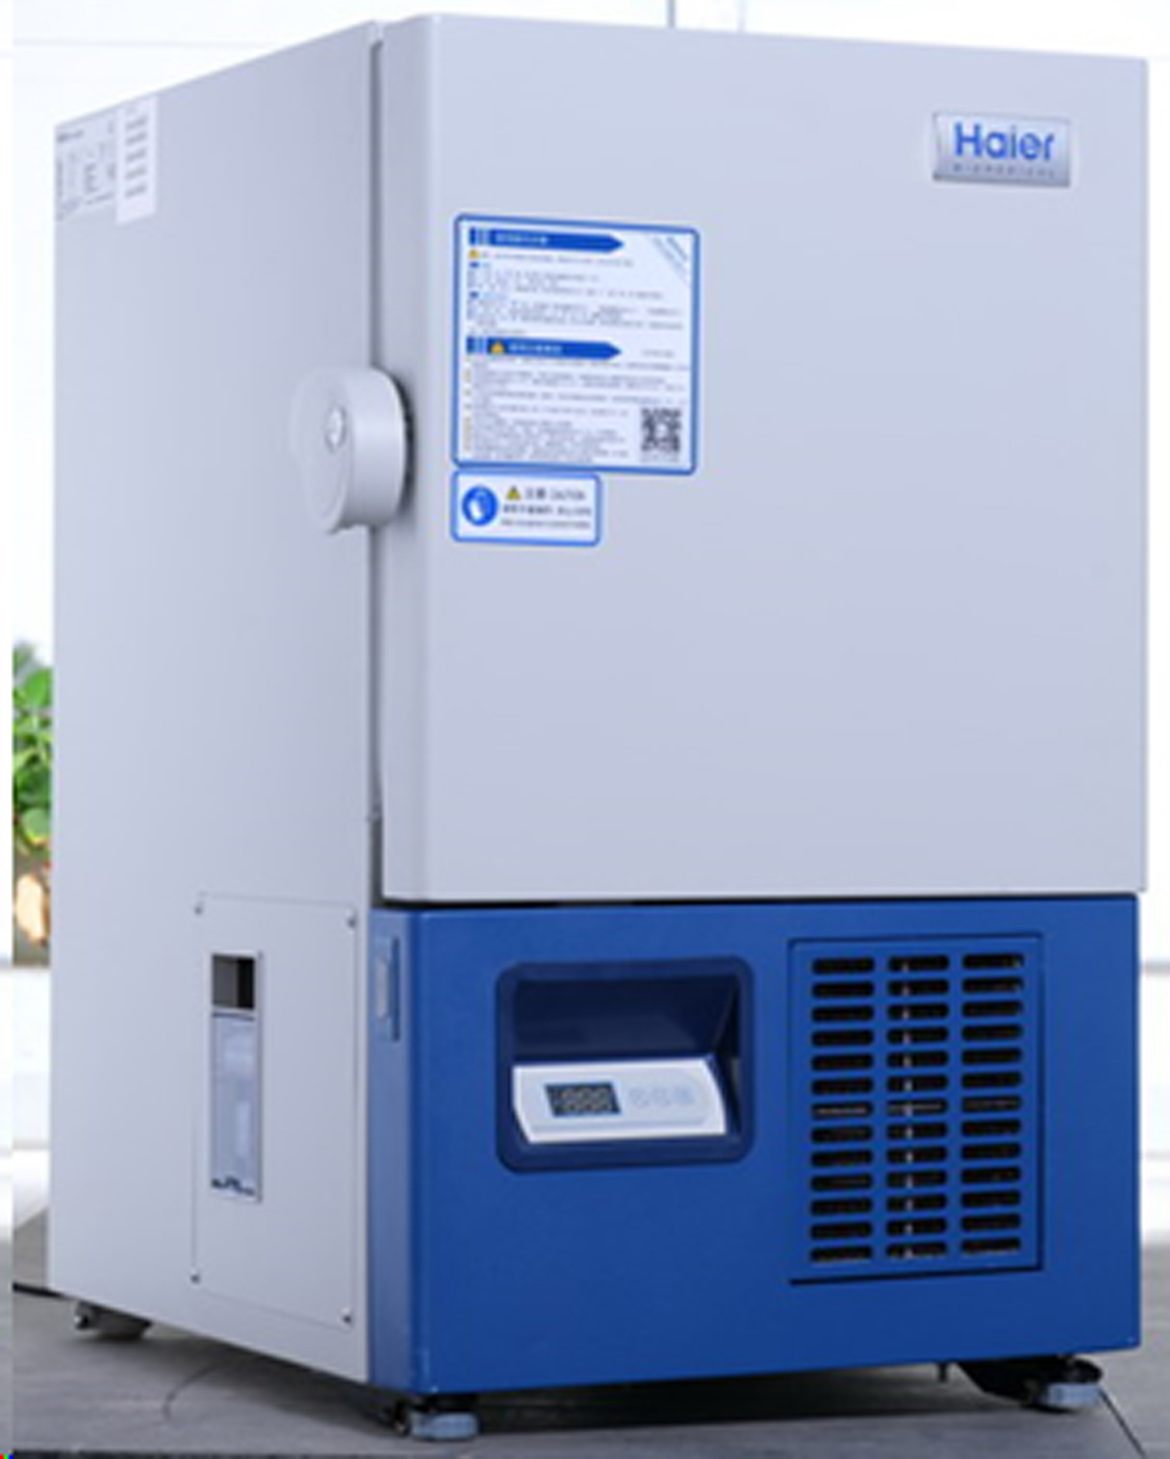 Produktfoto: HAIER -86°C Ultratiefkühlschrank 51l Volumen DW-86L51J, Energiesparmodell